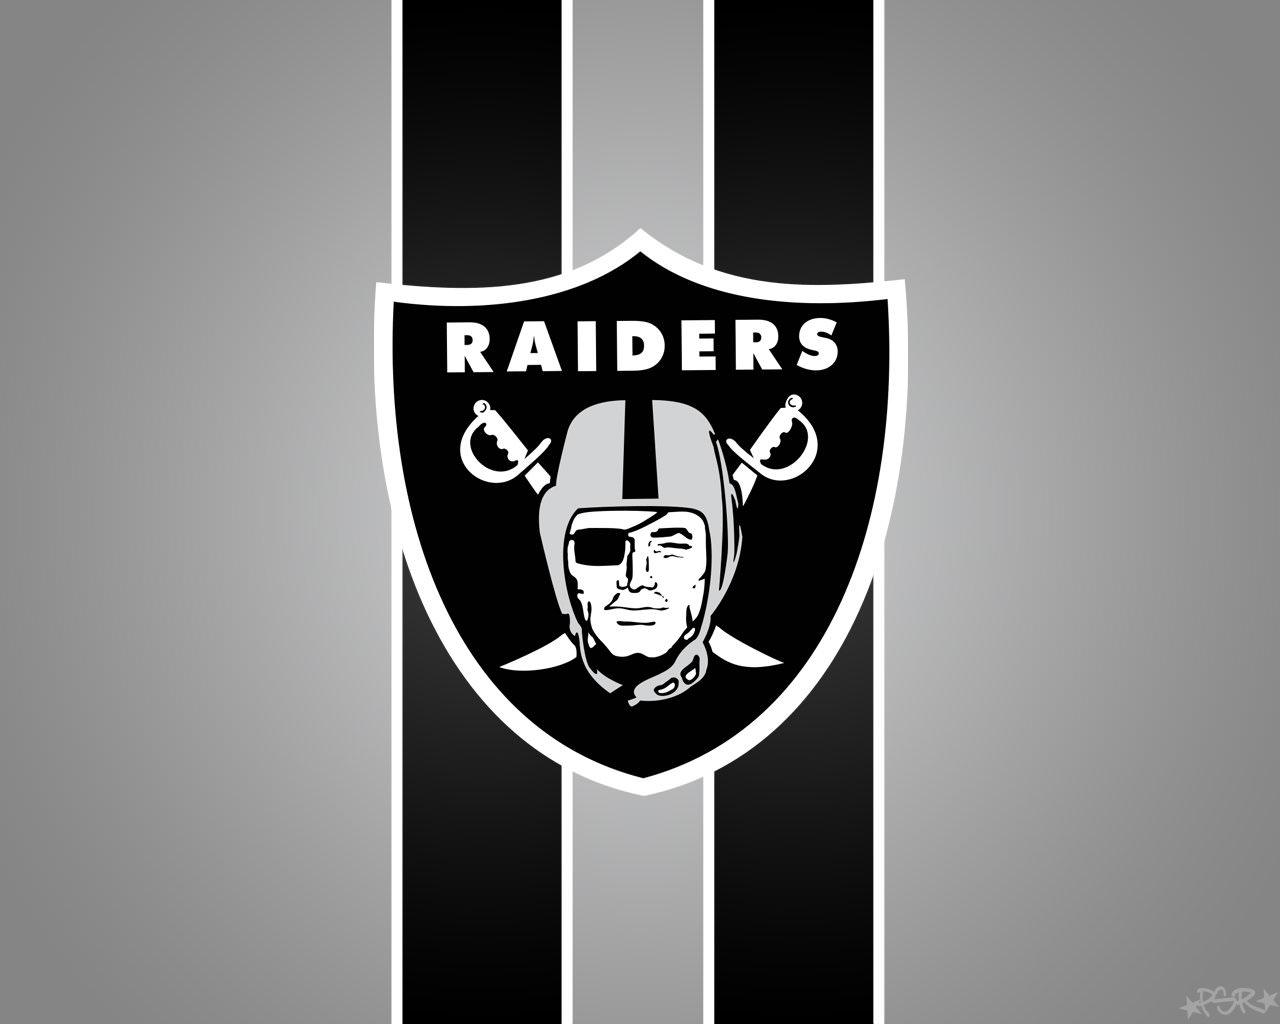 Oakland Raiders wallpaper HD for desktop background